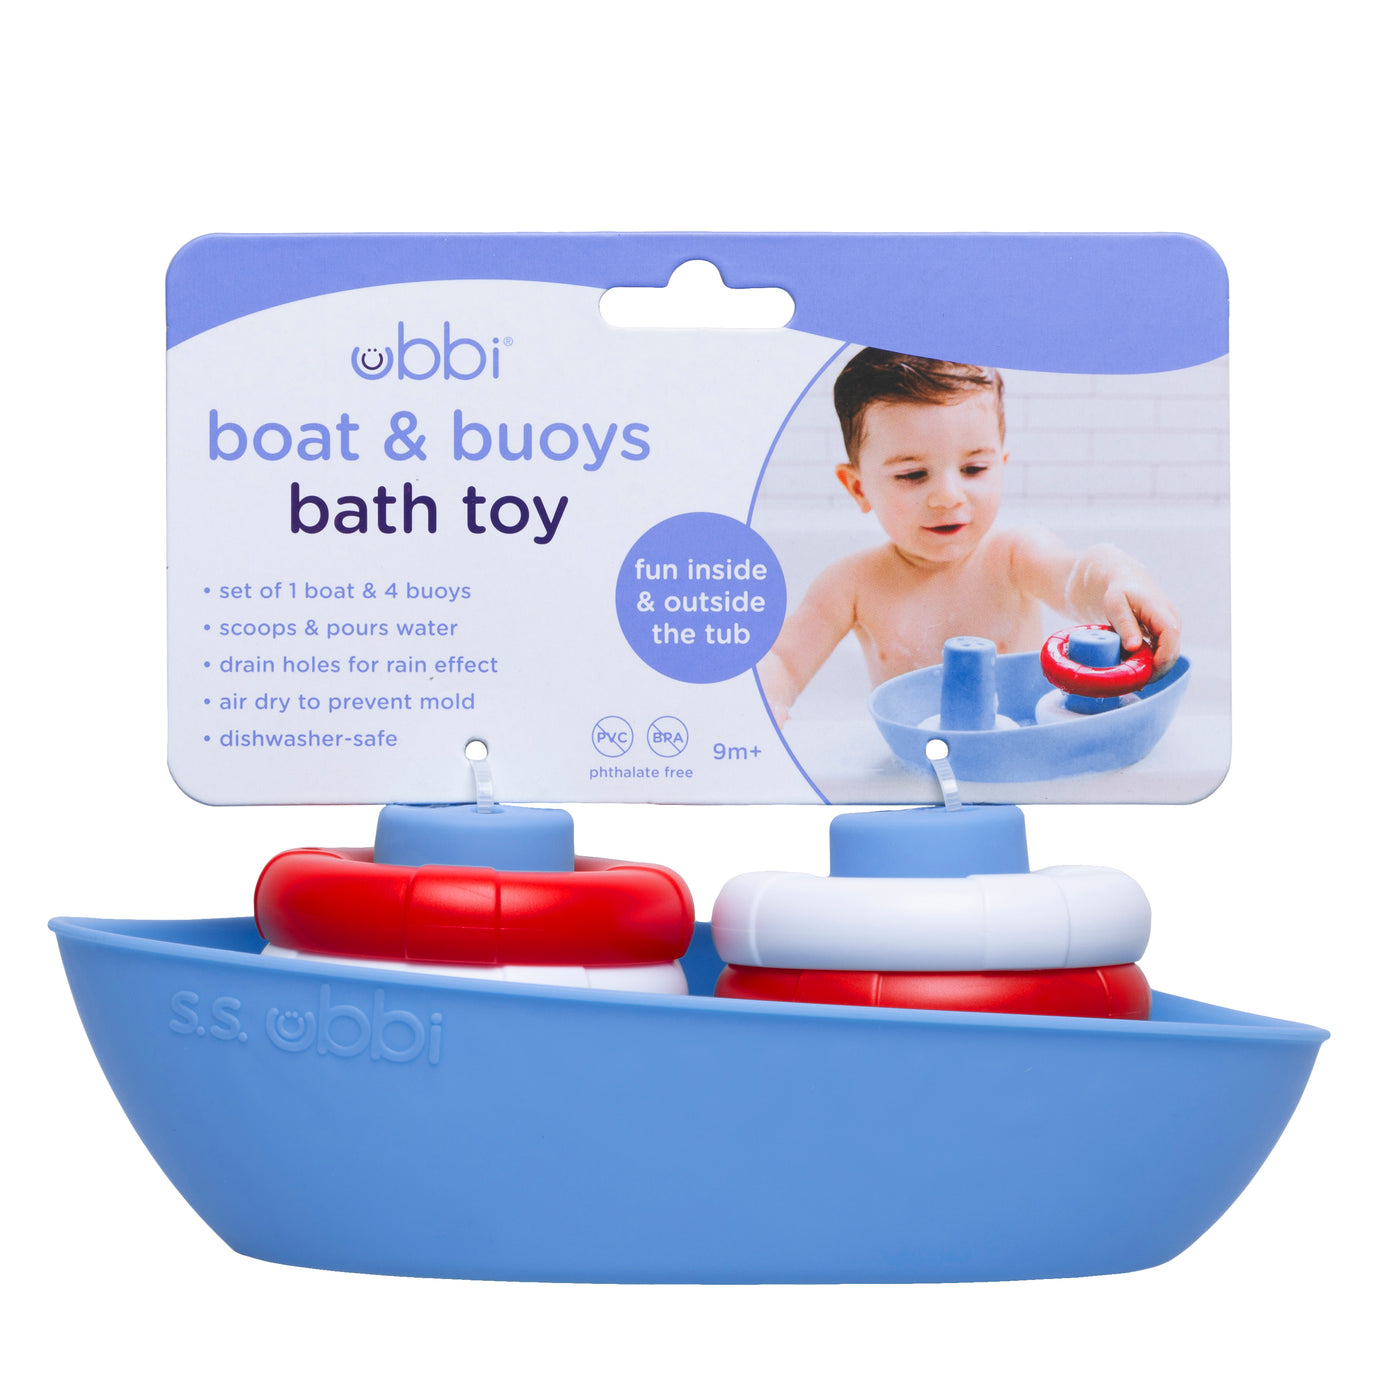 Ubbi interchangeable bath toys – ubbiworld